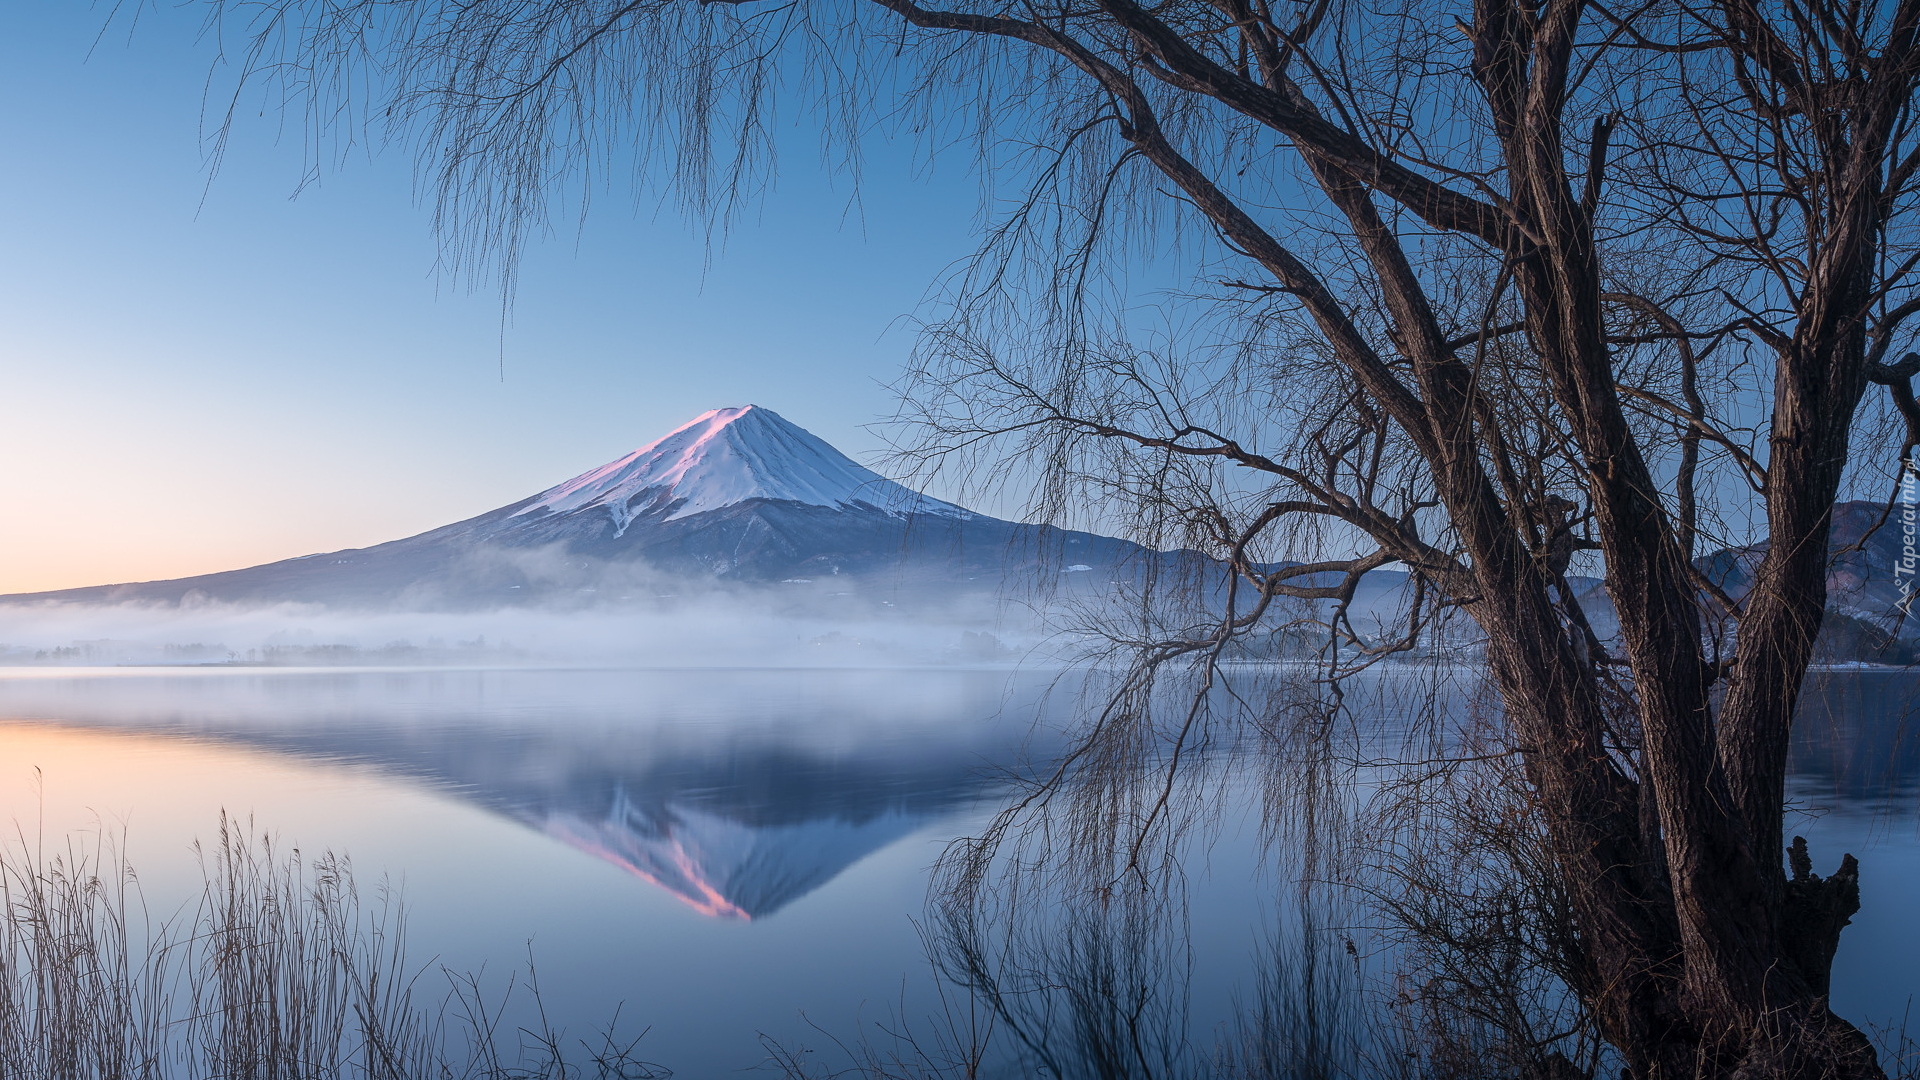 Jezioro, Lake Kawaguchi, Drzewa, Stratowulkan Fudżi, Góra, Mount Fuji, Japonia